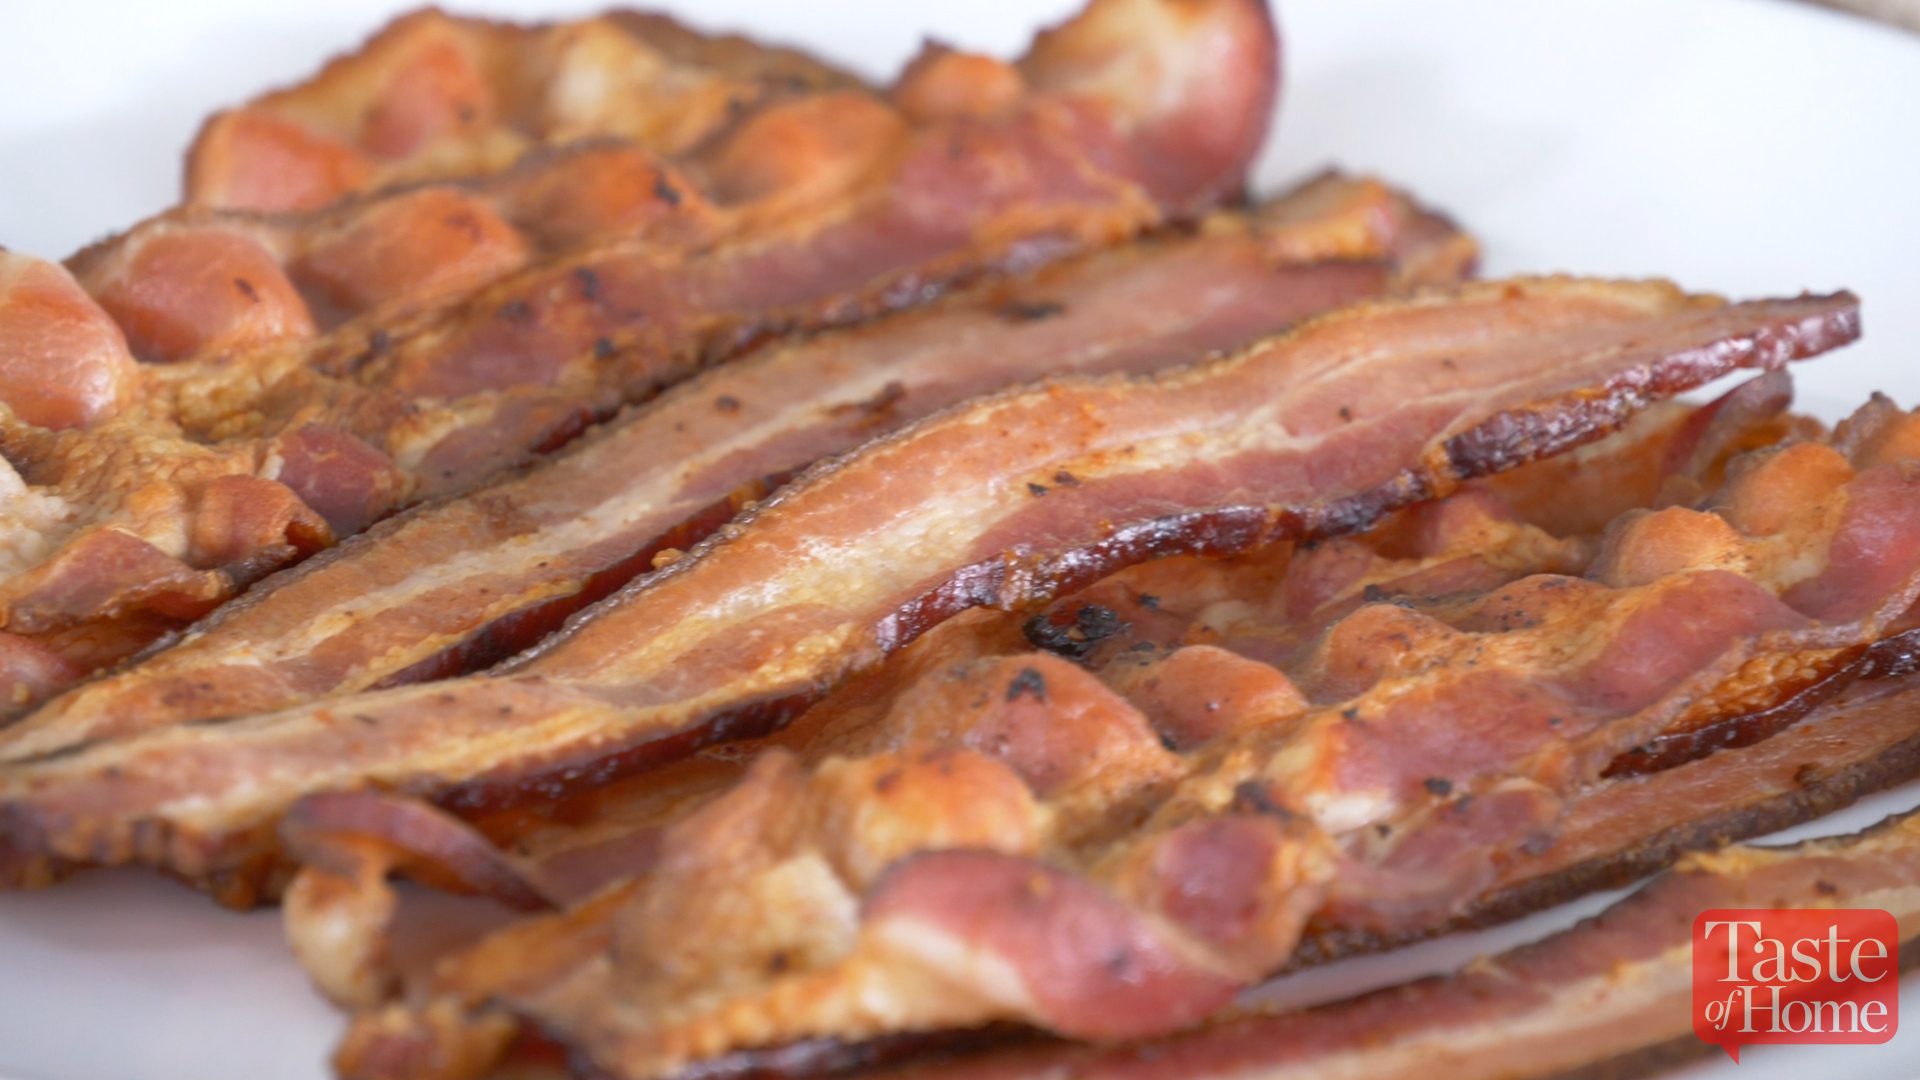 Saving Bacon Grease - 7 Reasons Penny Pinchers Save Bacon Grease